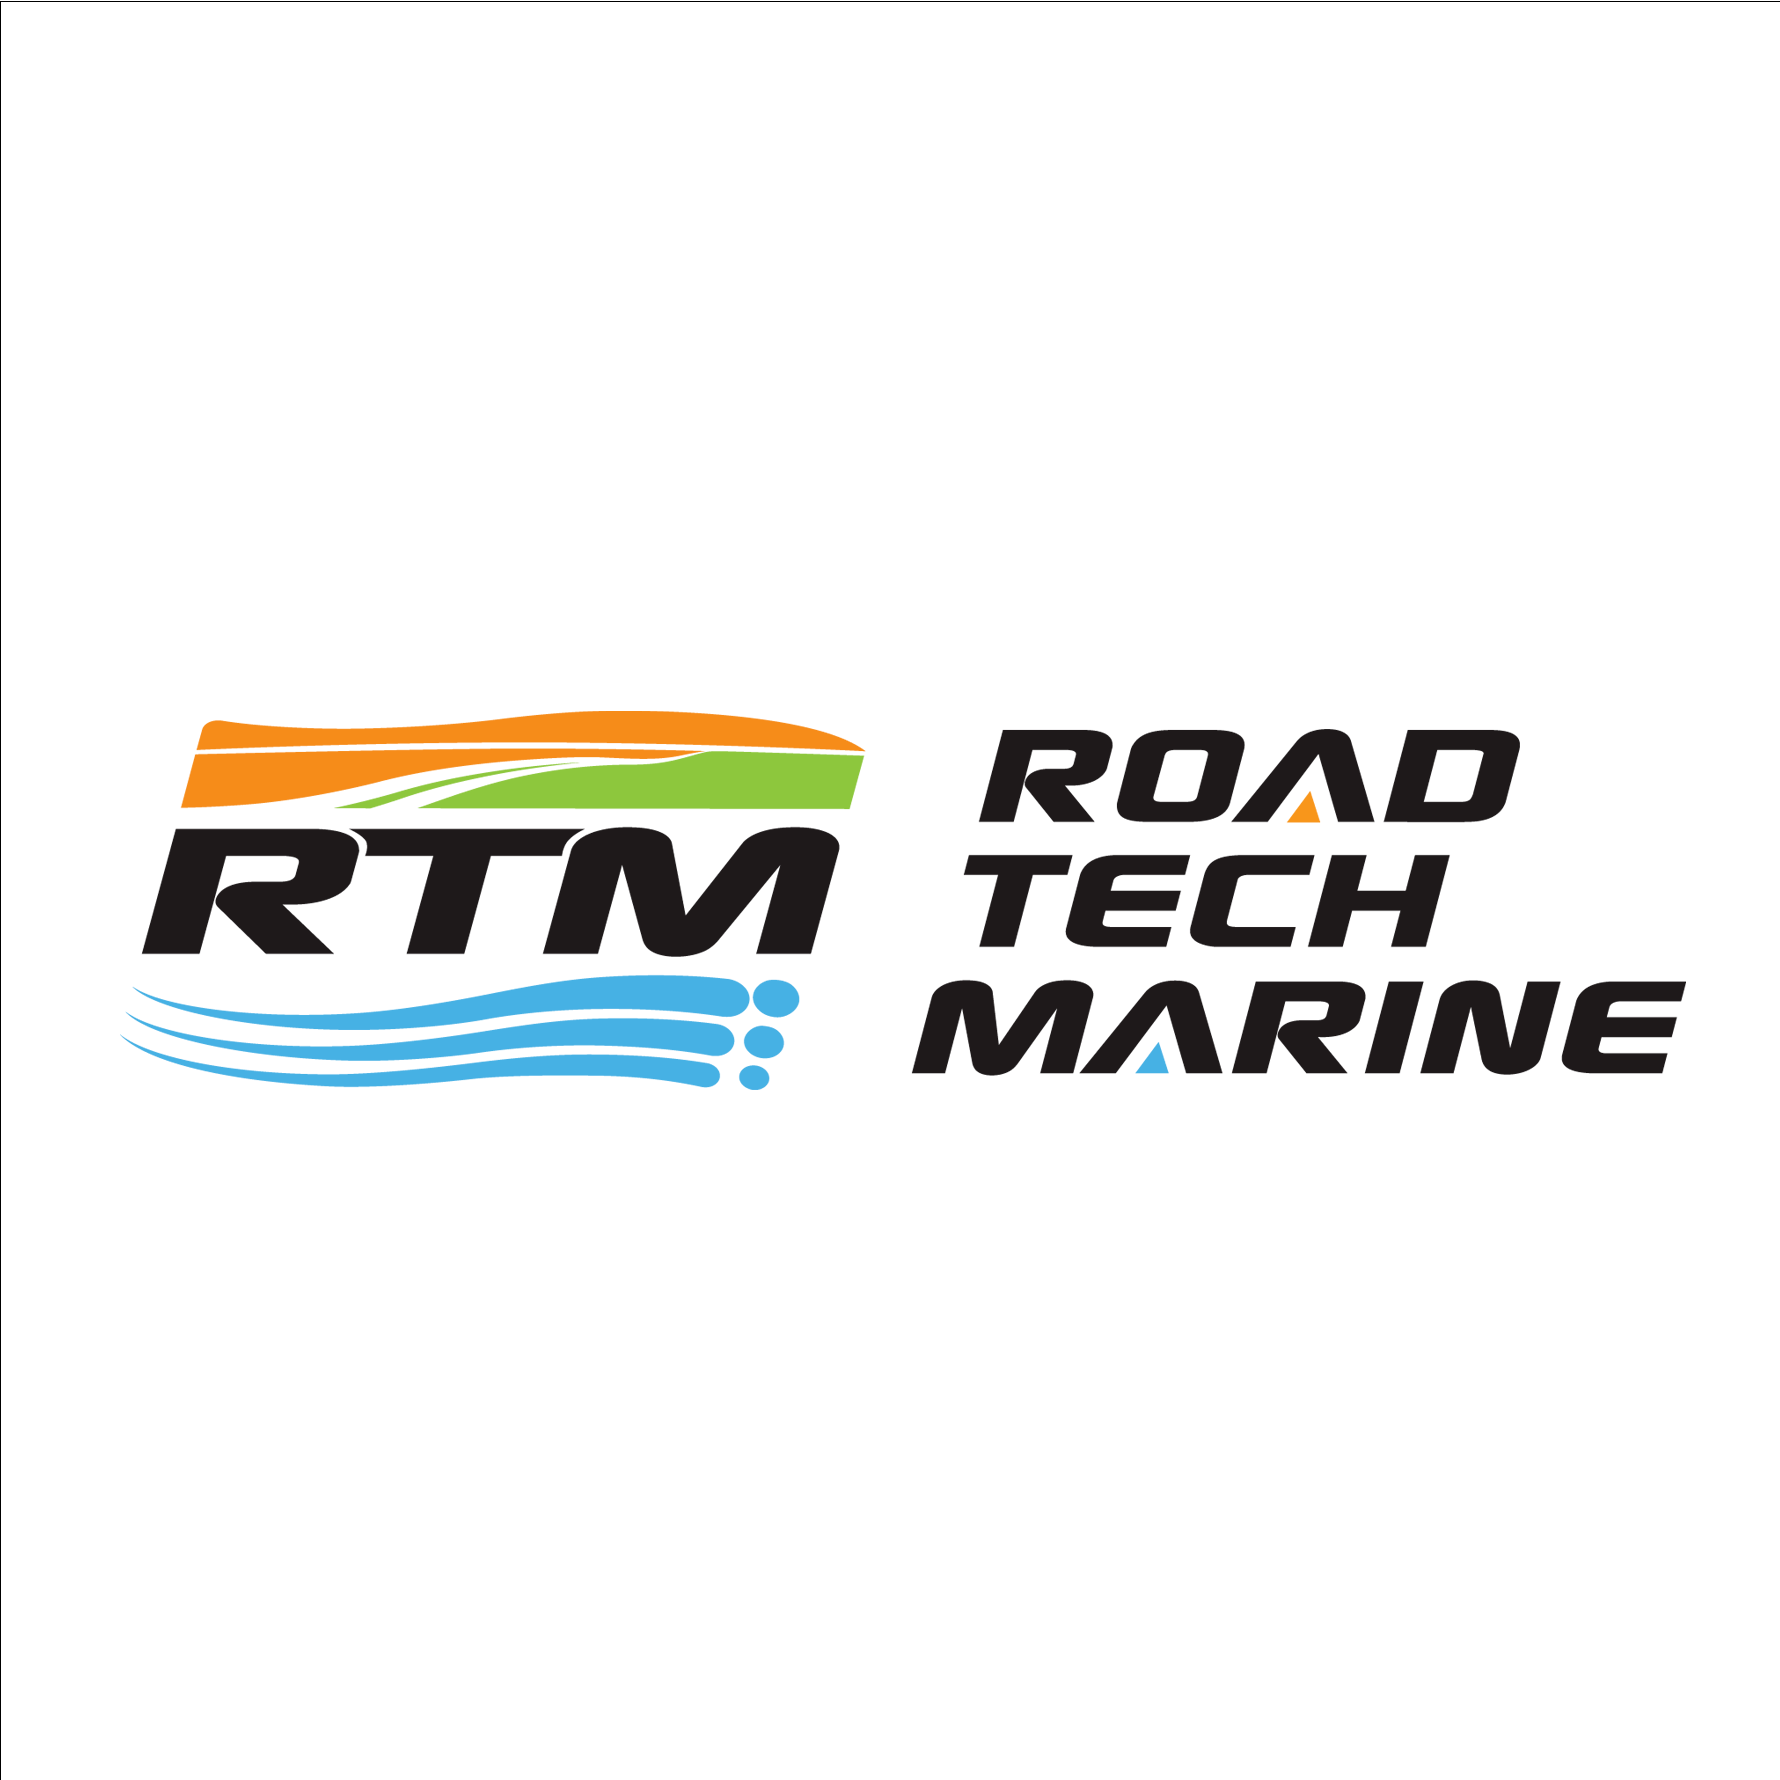 RTM - Road Tech Marine Rockhampton - Allenstown, QLD 4700 - (07) 4927 9904 | ShowMeLocal.com